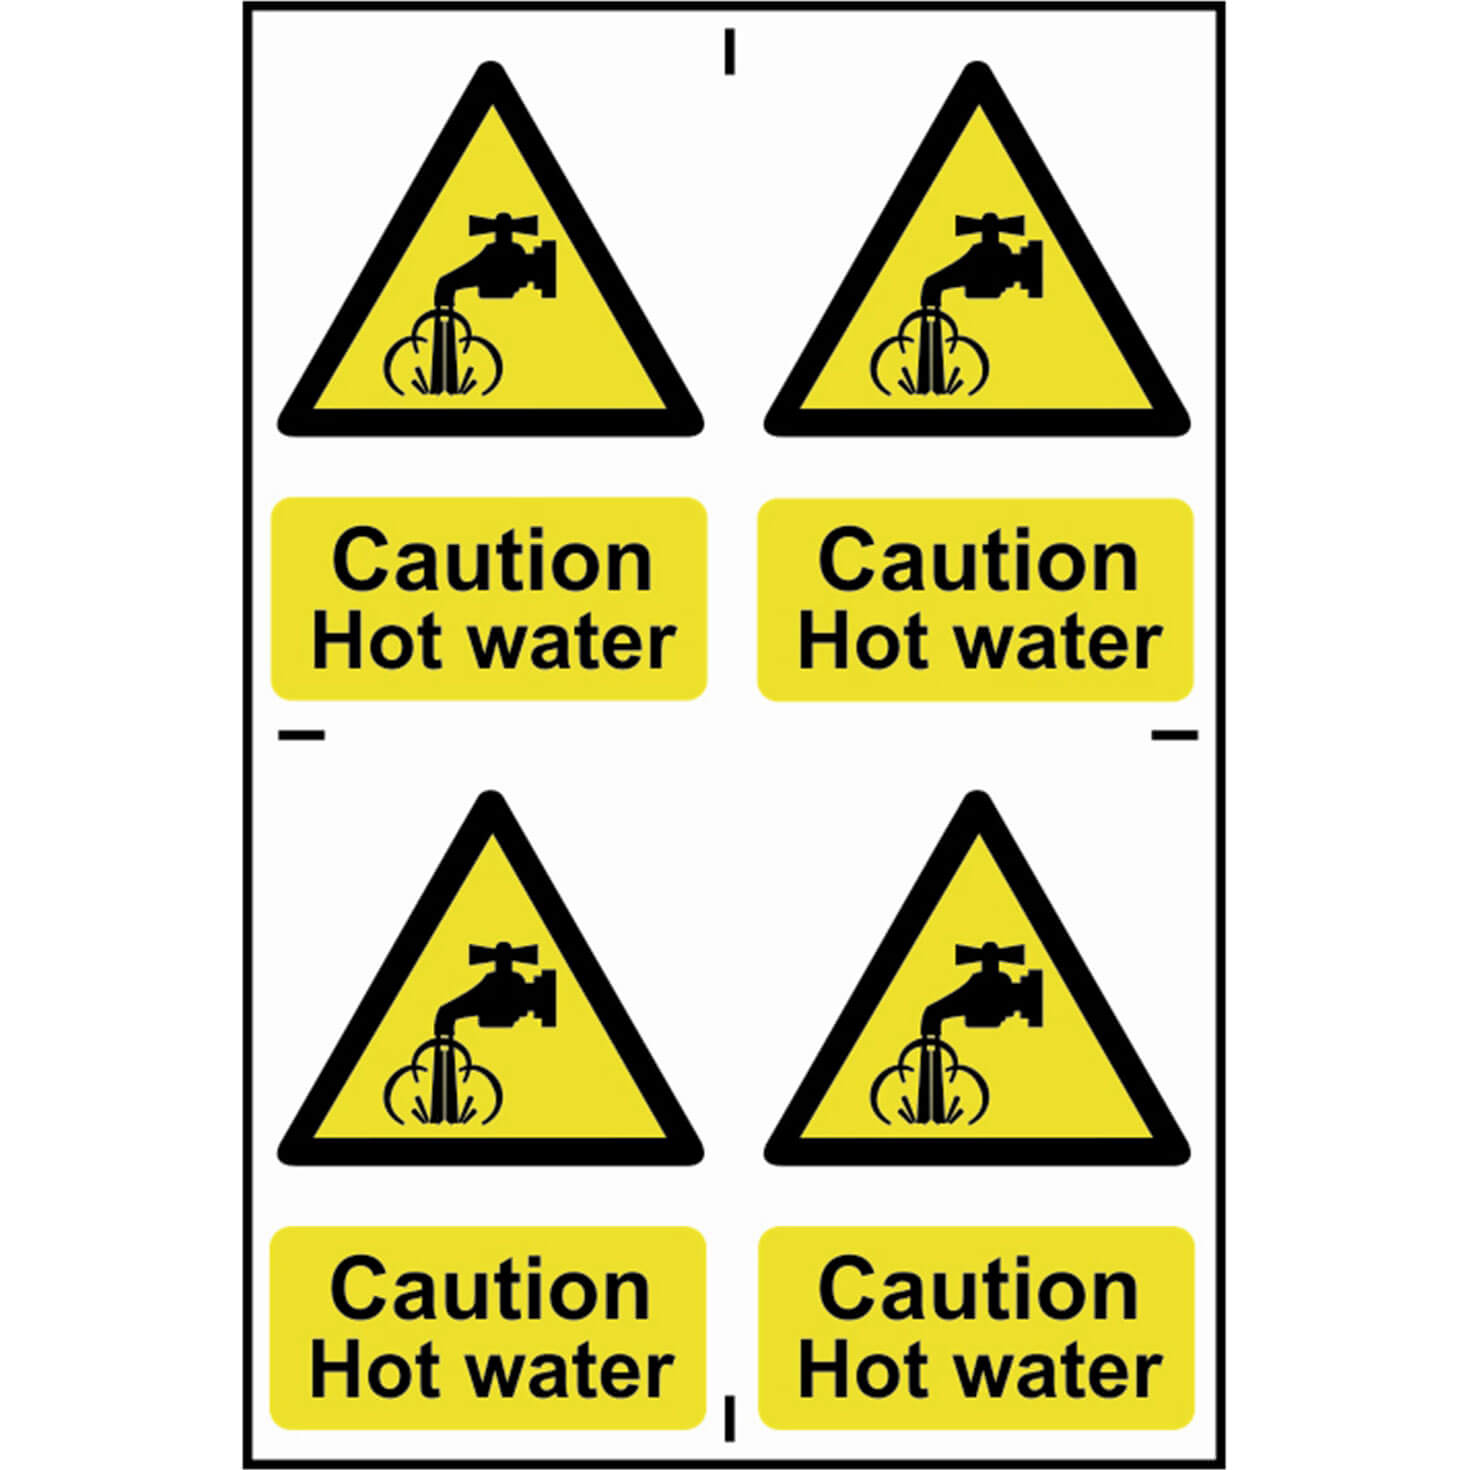 Warning Caution Very Hot Water Danger & Warning Labels 